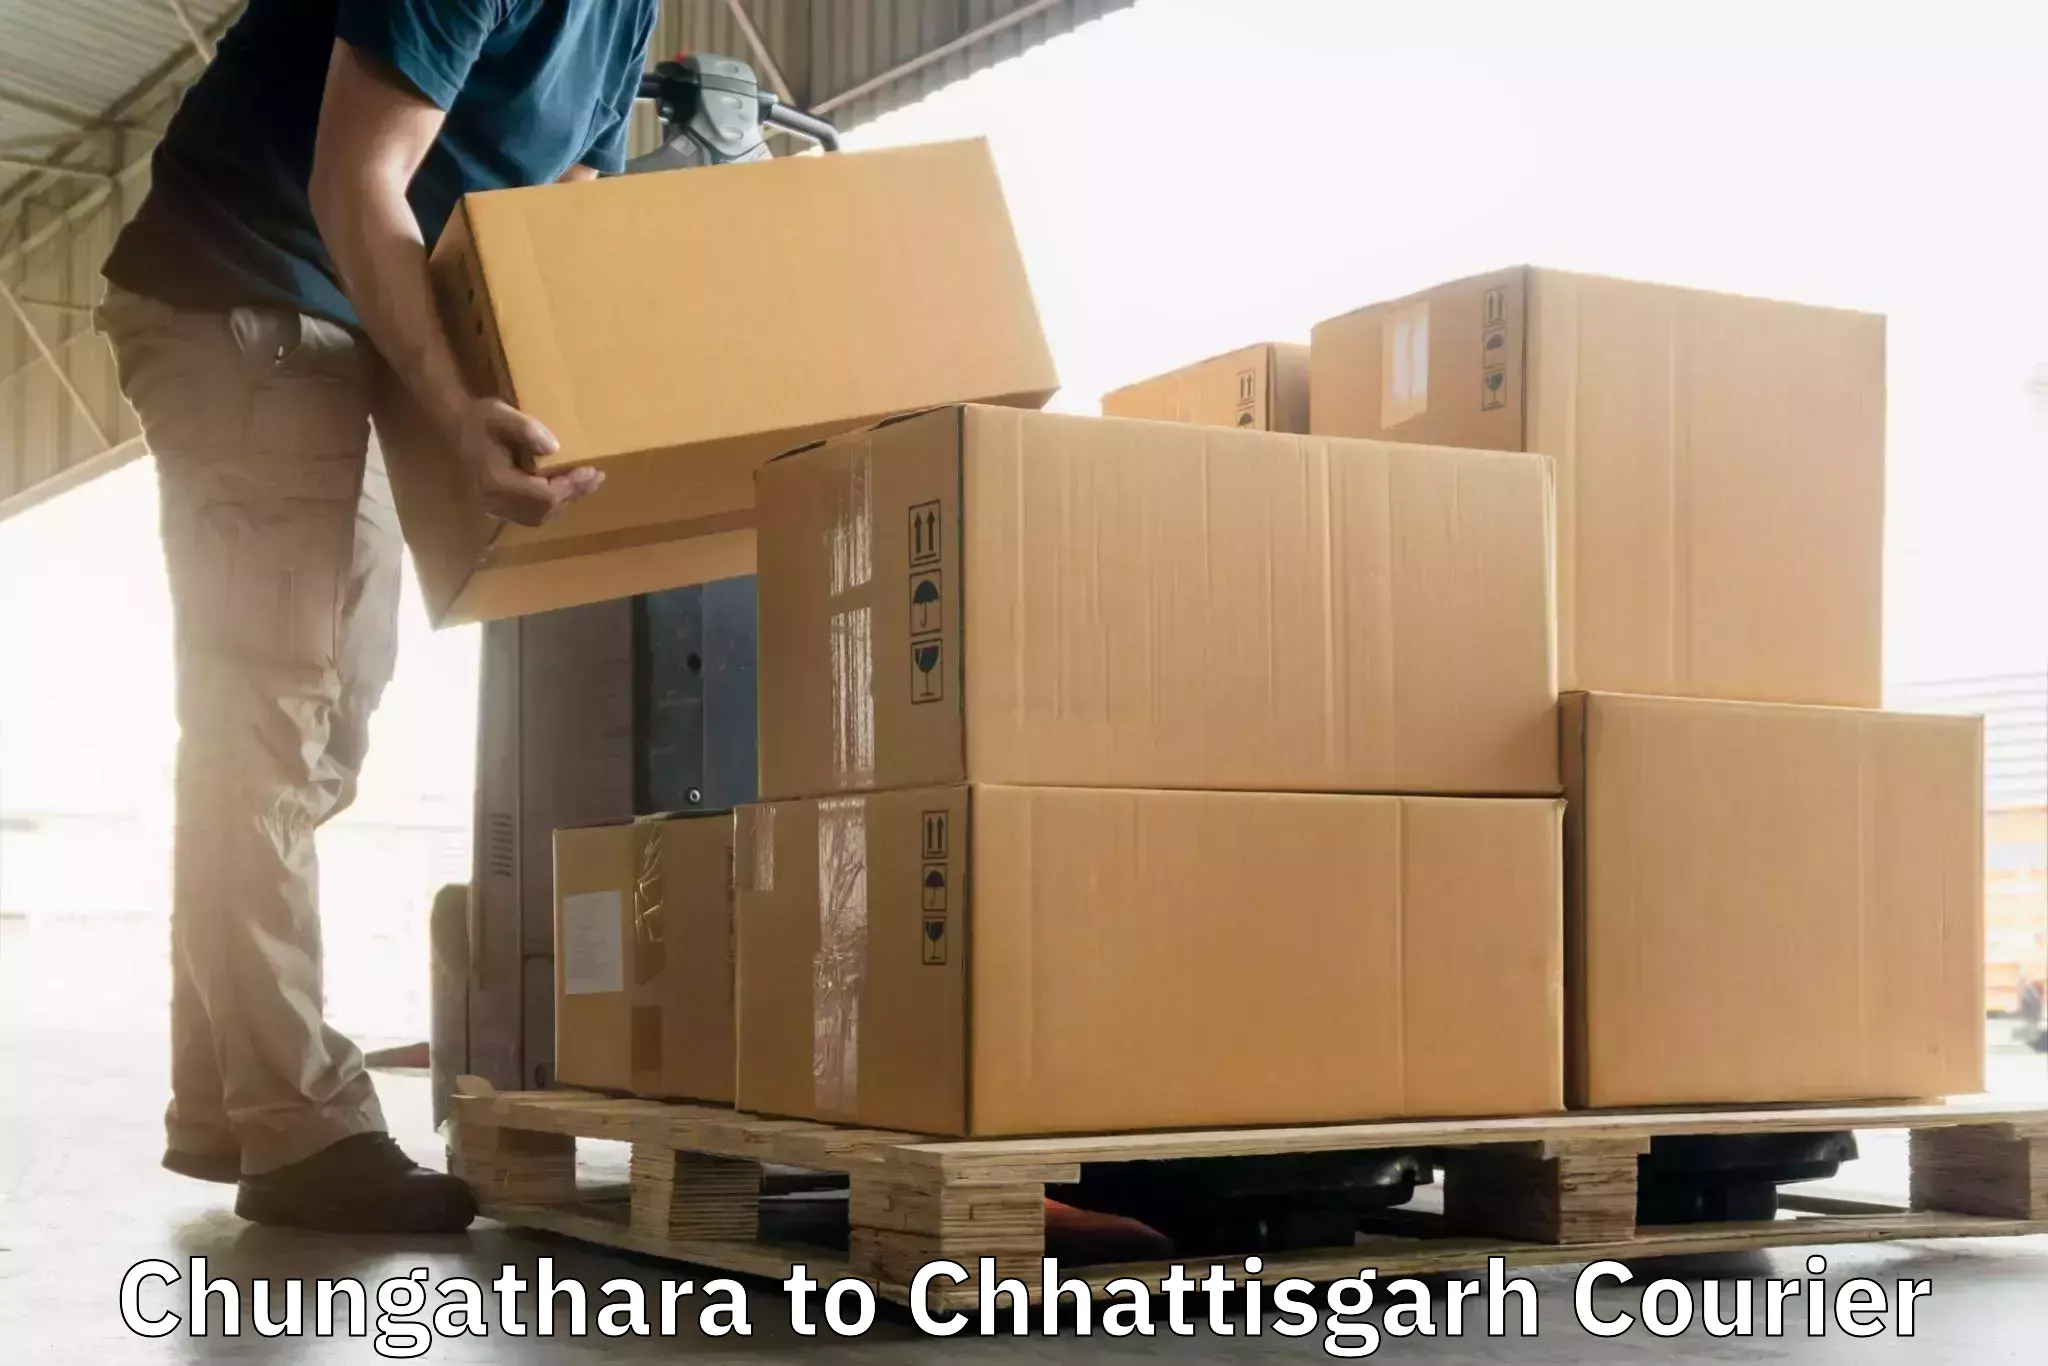 Efficient cargo handling Chungathara to Chhattisgarh